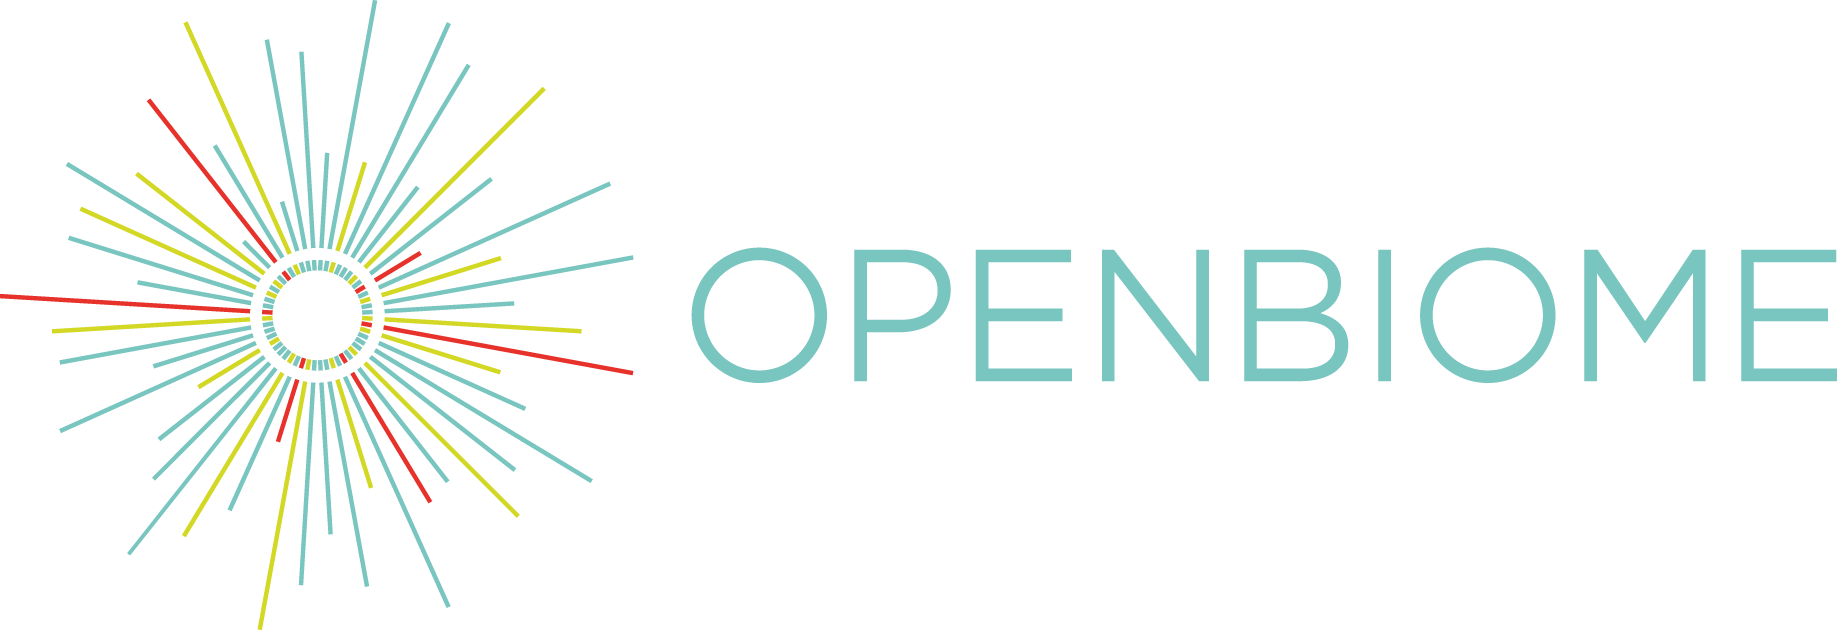 OpenBiome logo